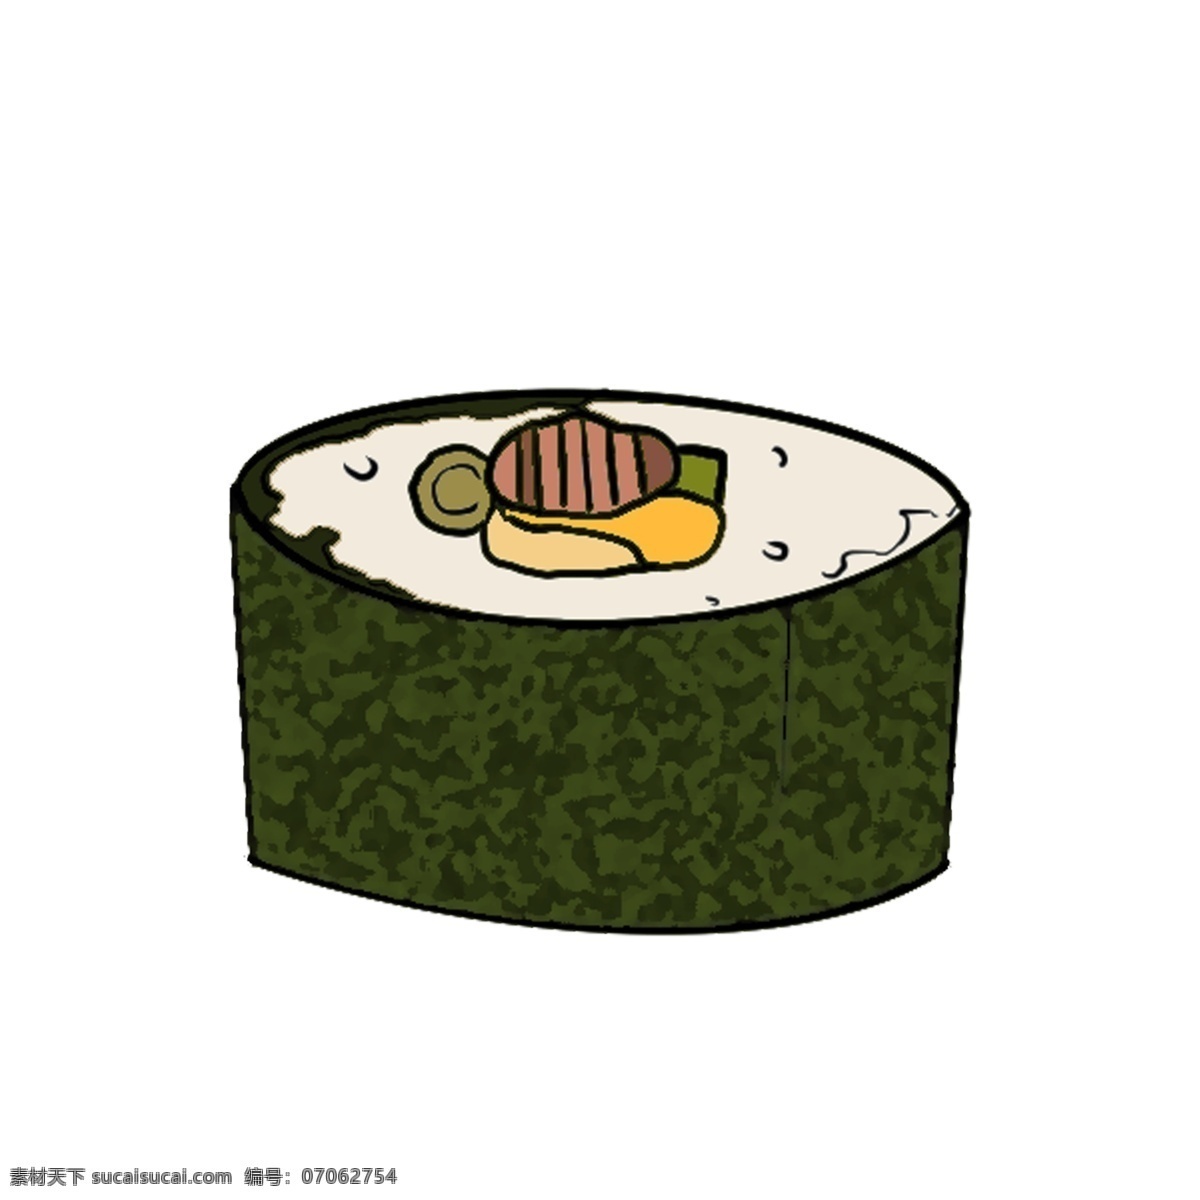 日本 特色 寿司 插图 一块寿司 日本料理插图 寿司插图 日本寿司 日本食物 美食 日式寿司插图